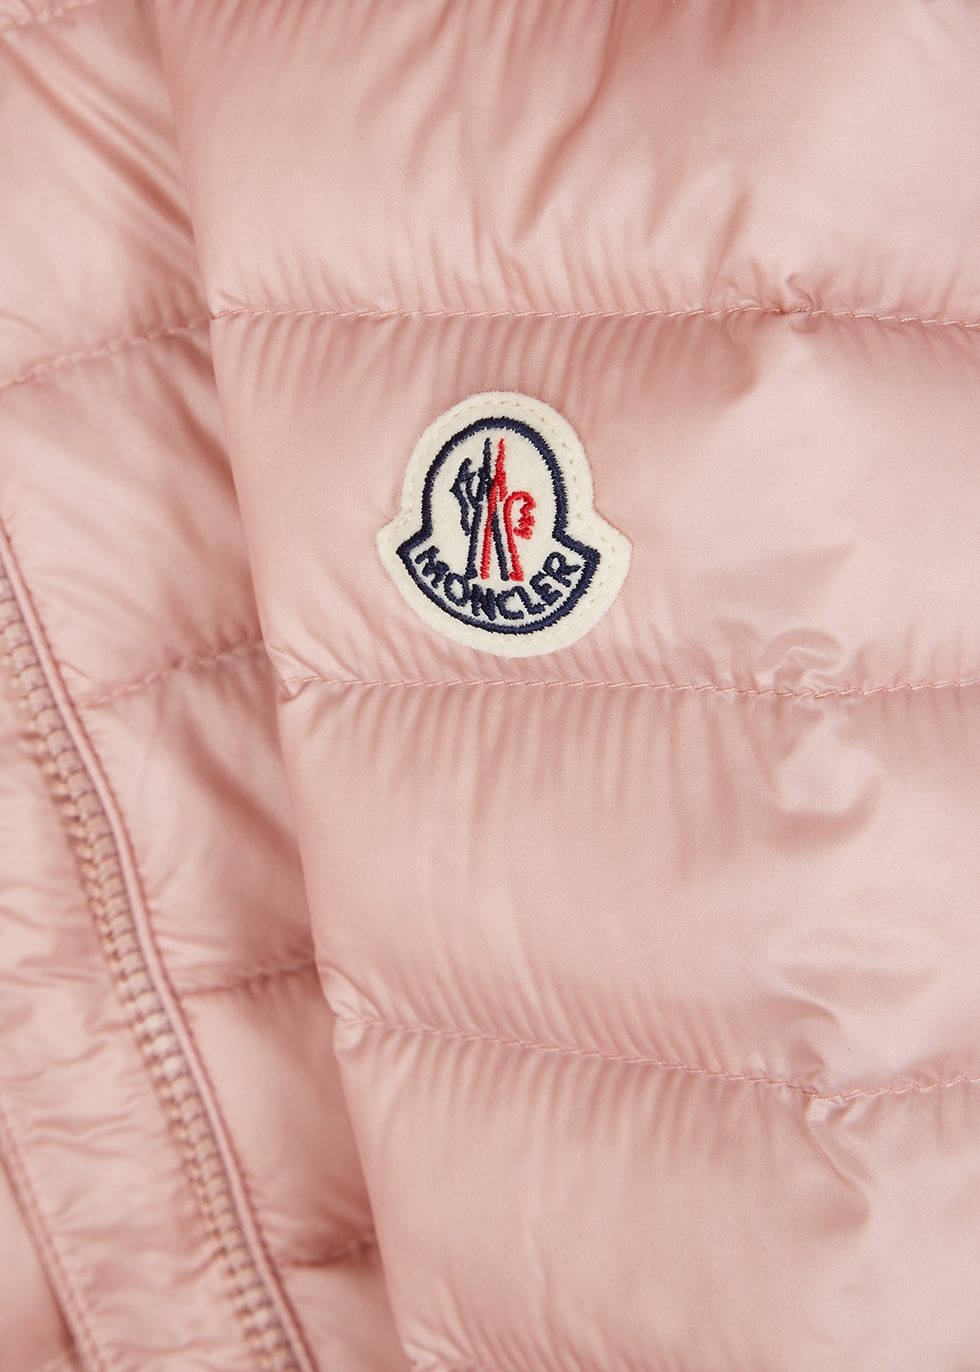 pink moncler coat